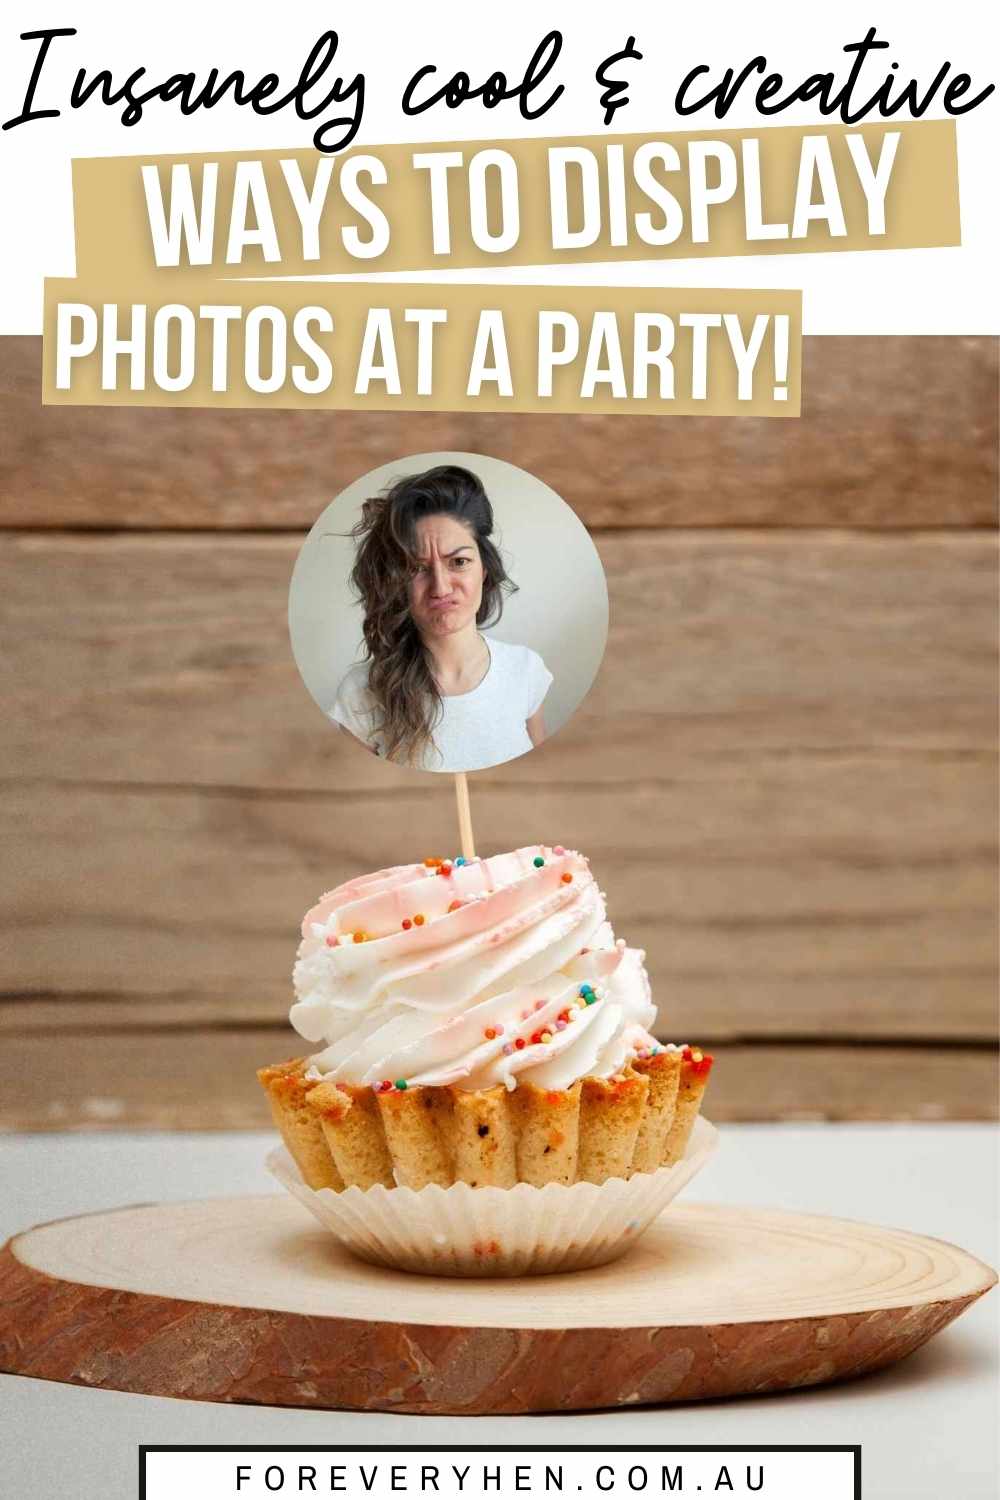 Ways to Display Photos at a Party